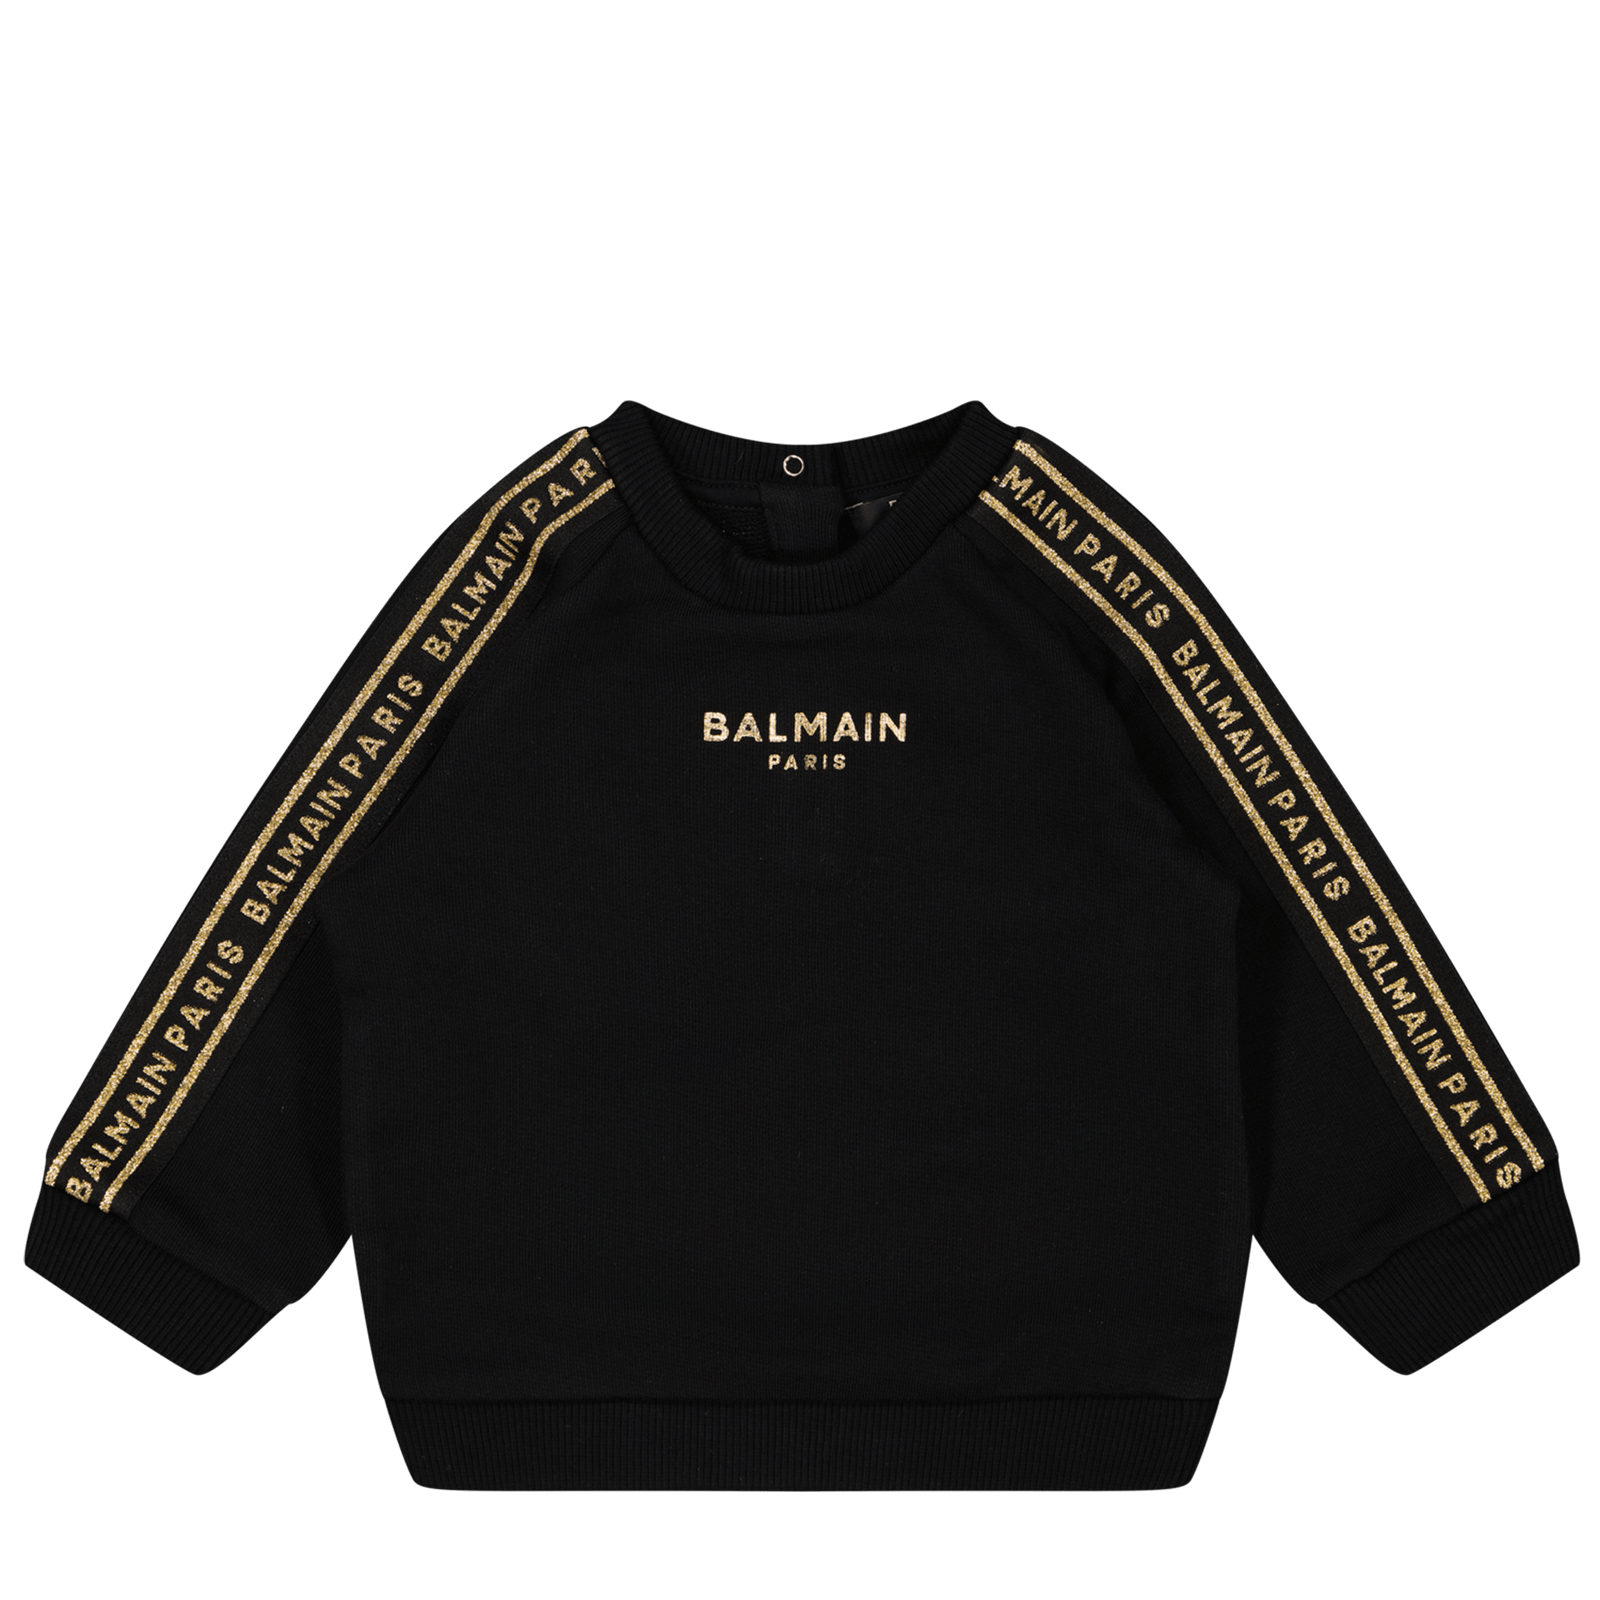 Balmain Baby Unisex Sweater Black